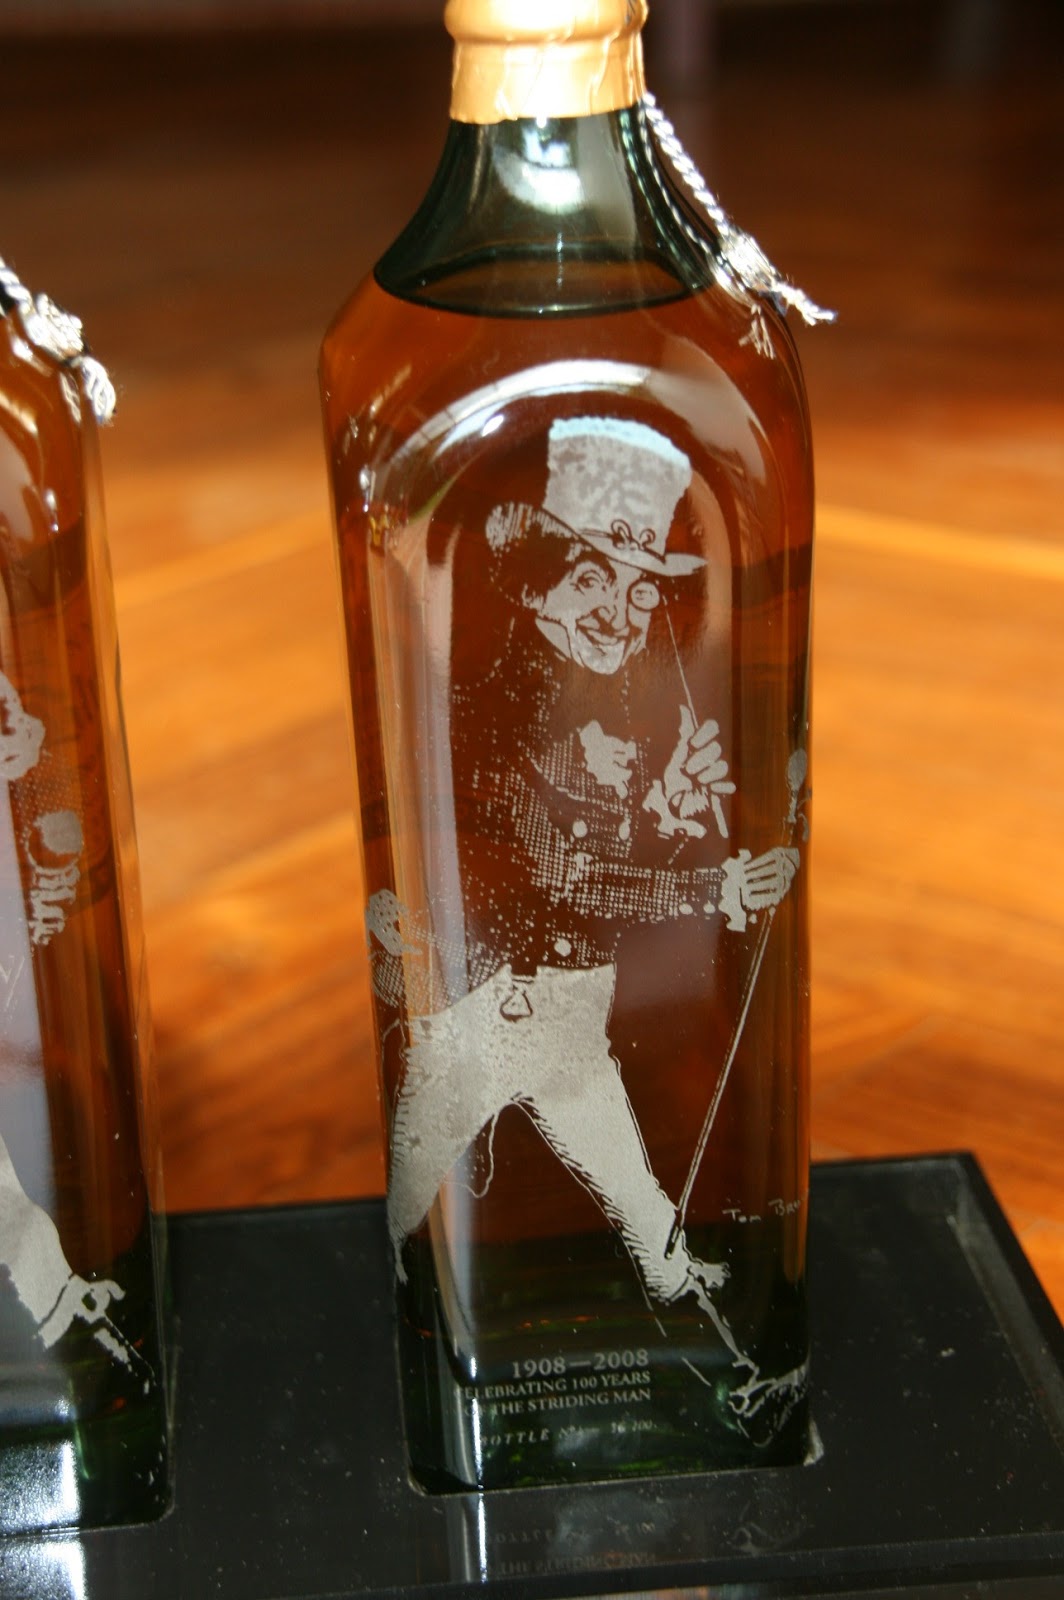 Johnnie Walker Bottles History and Evolution: The Striding